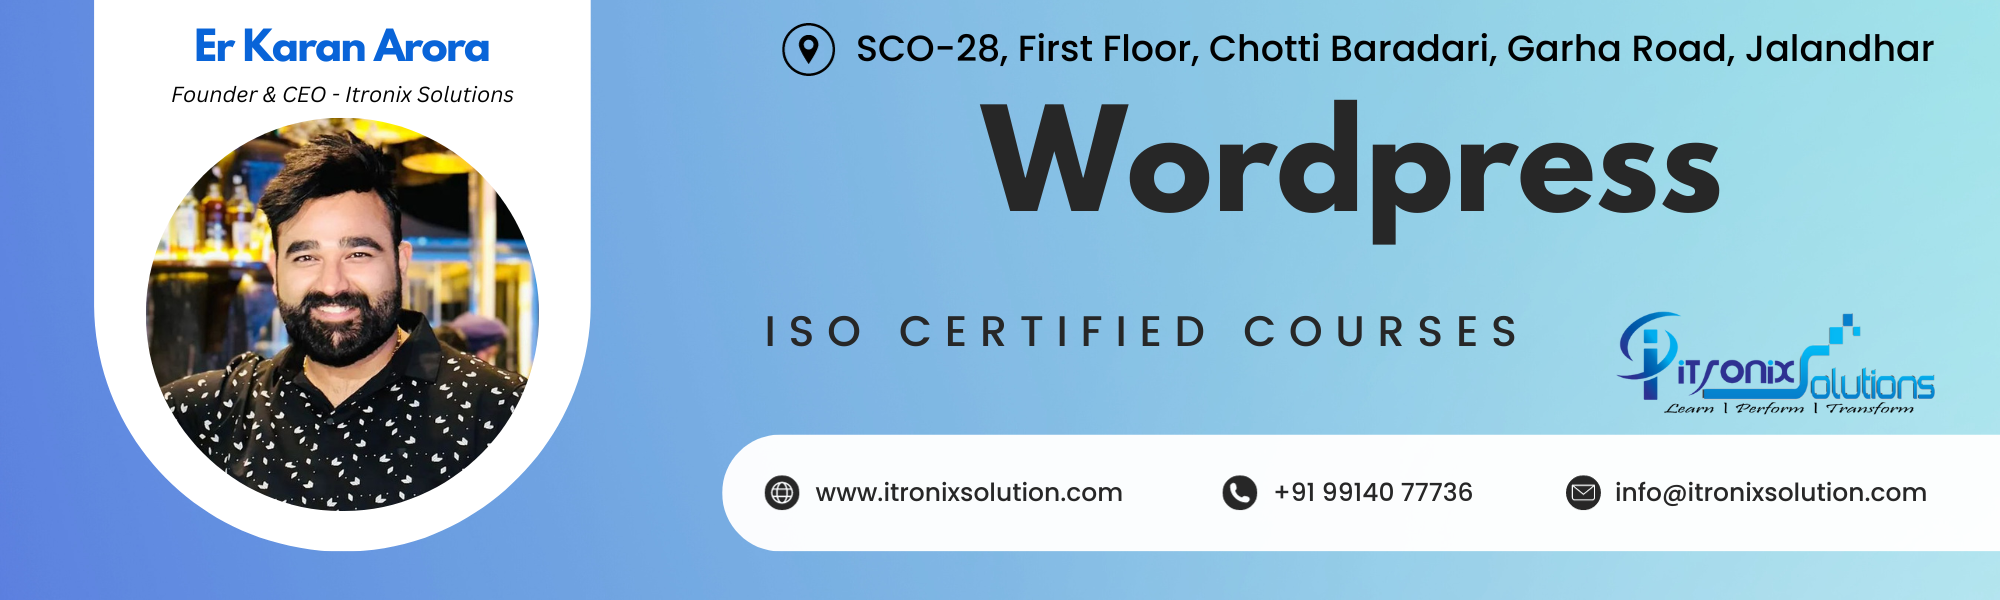 Best Wordpress Course in Jalandhar - ITRONIX Solutions